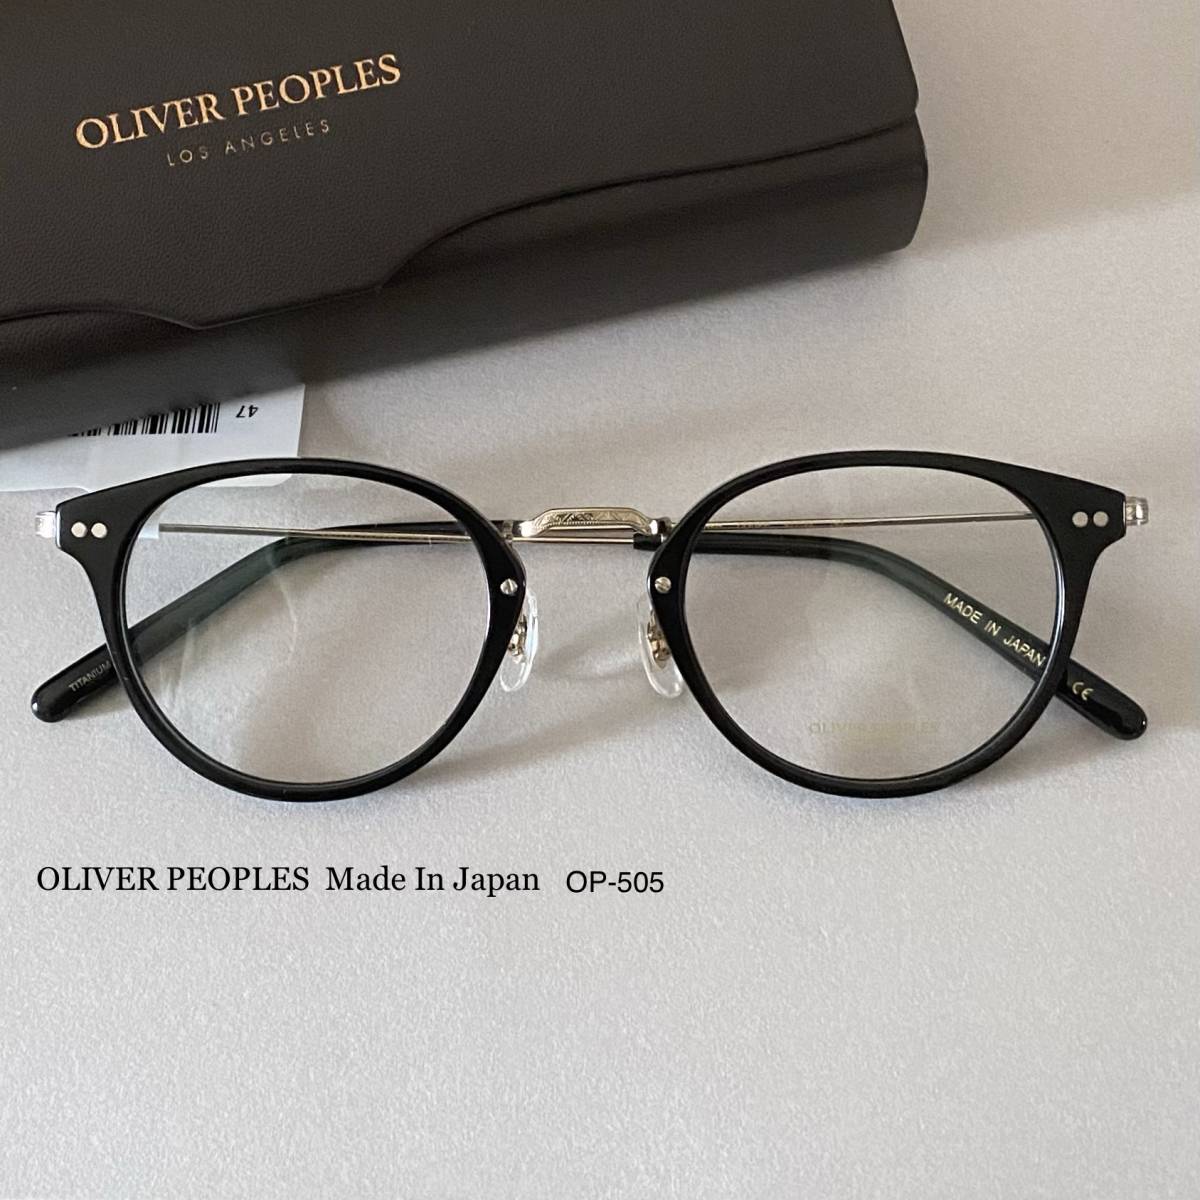 OV96 新品 OLIVER PEOPLES OP-505 メガネフレーム オリバーピープルズ